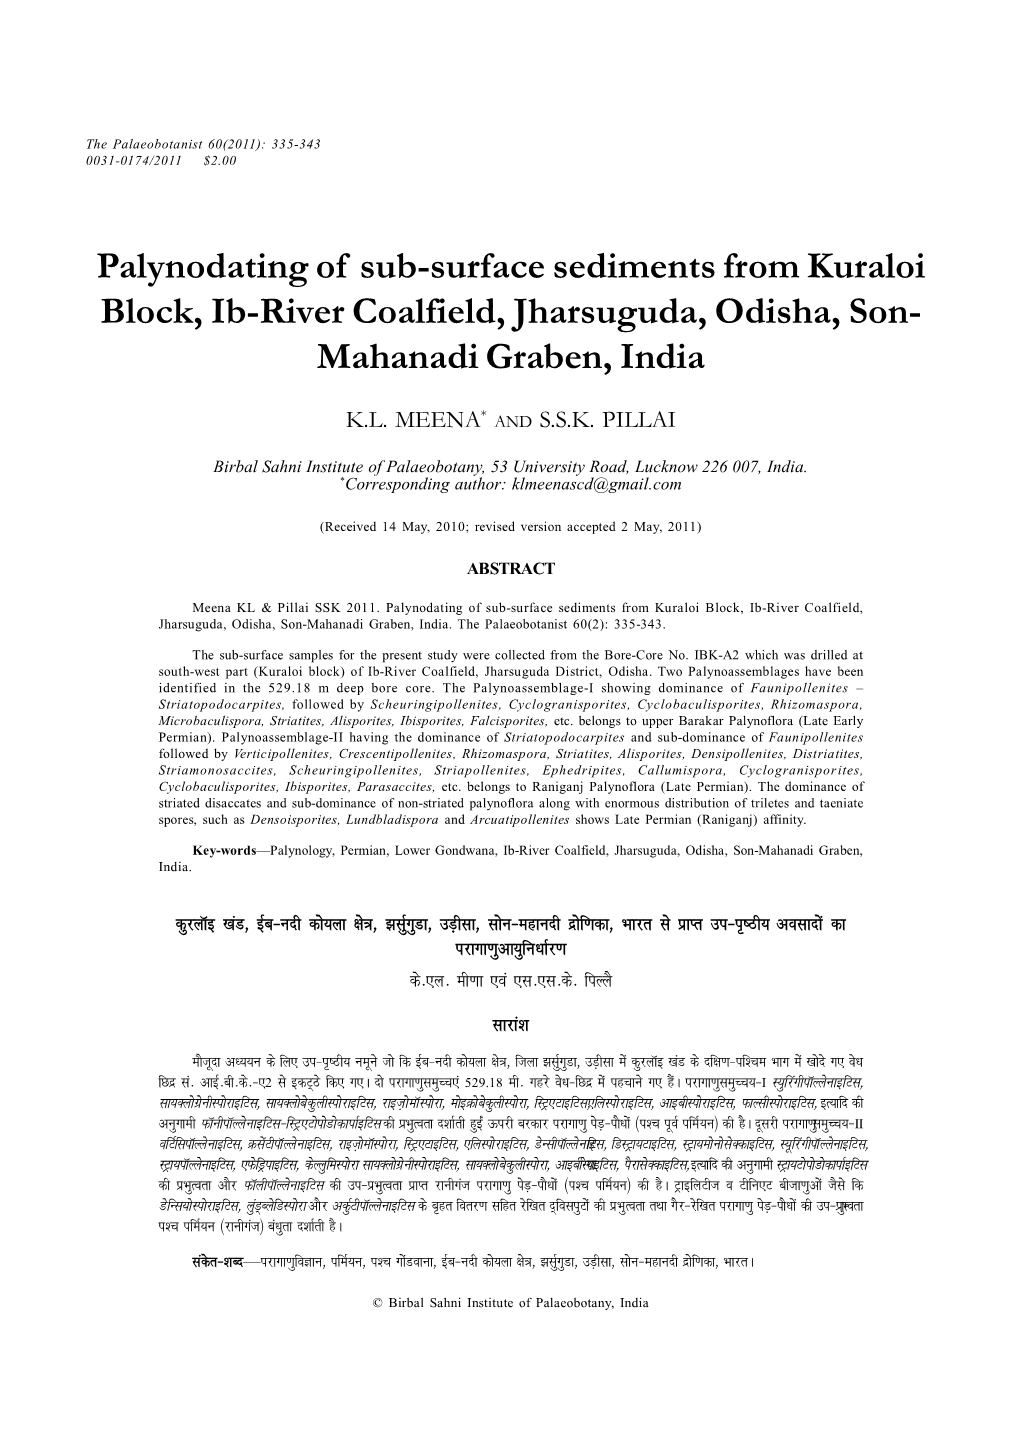 Palynodating of Sub-Surface Sediments from Kuraloi Block, Ib-River Coalfield, Jharsuguda, Odisha, Son- Mahanadi Graben, India